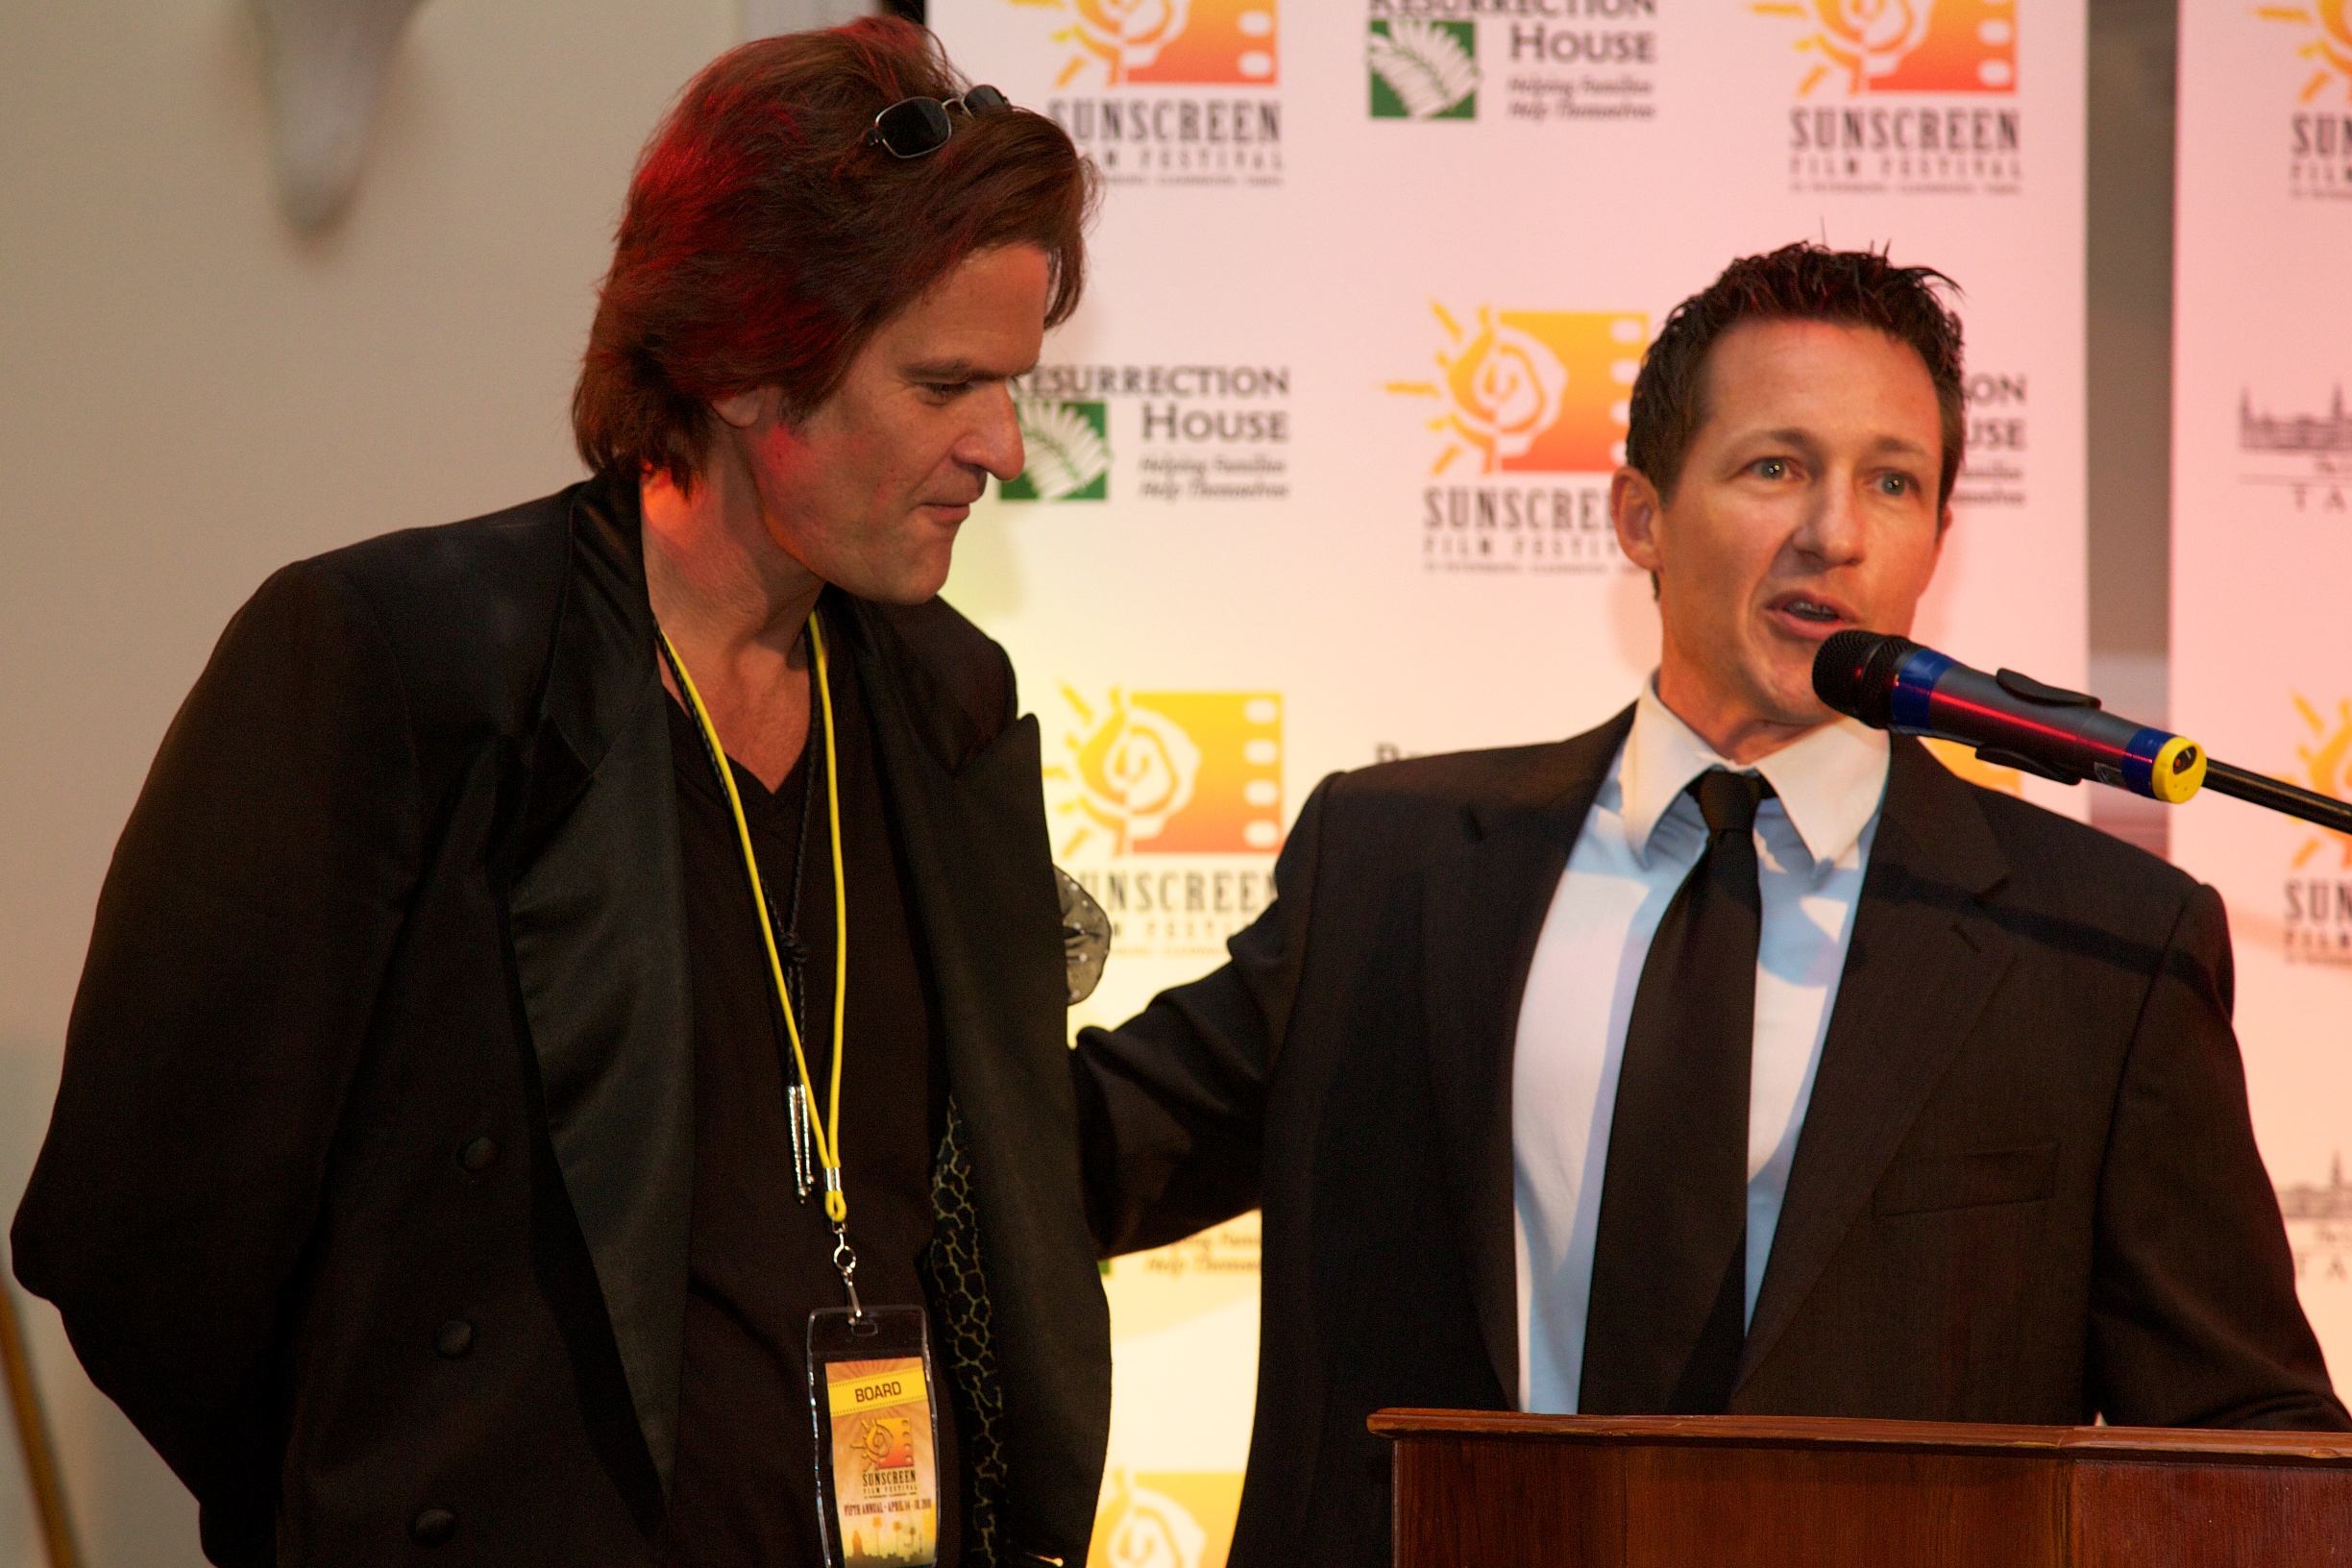 Tony Armer presents filmmaker Tom Garrett with a film grant at the 2010 Sunscreen Film Festival Award's Ceremony.